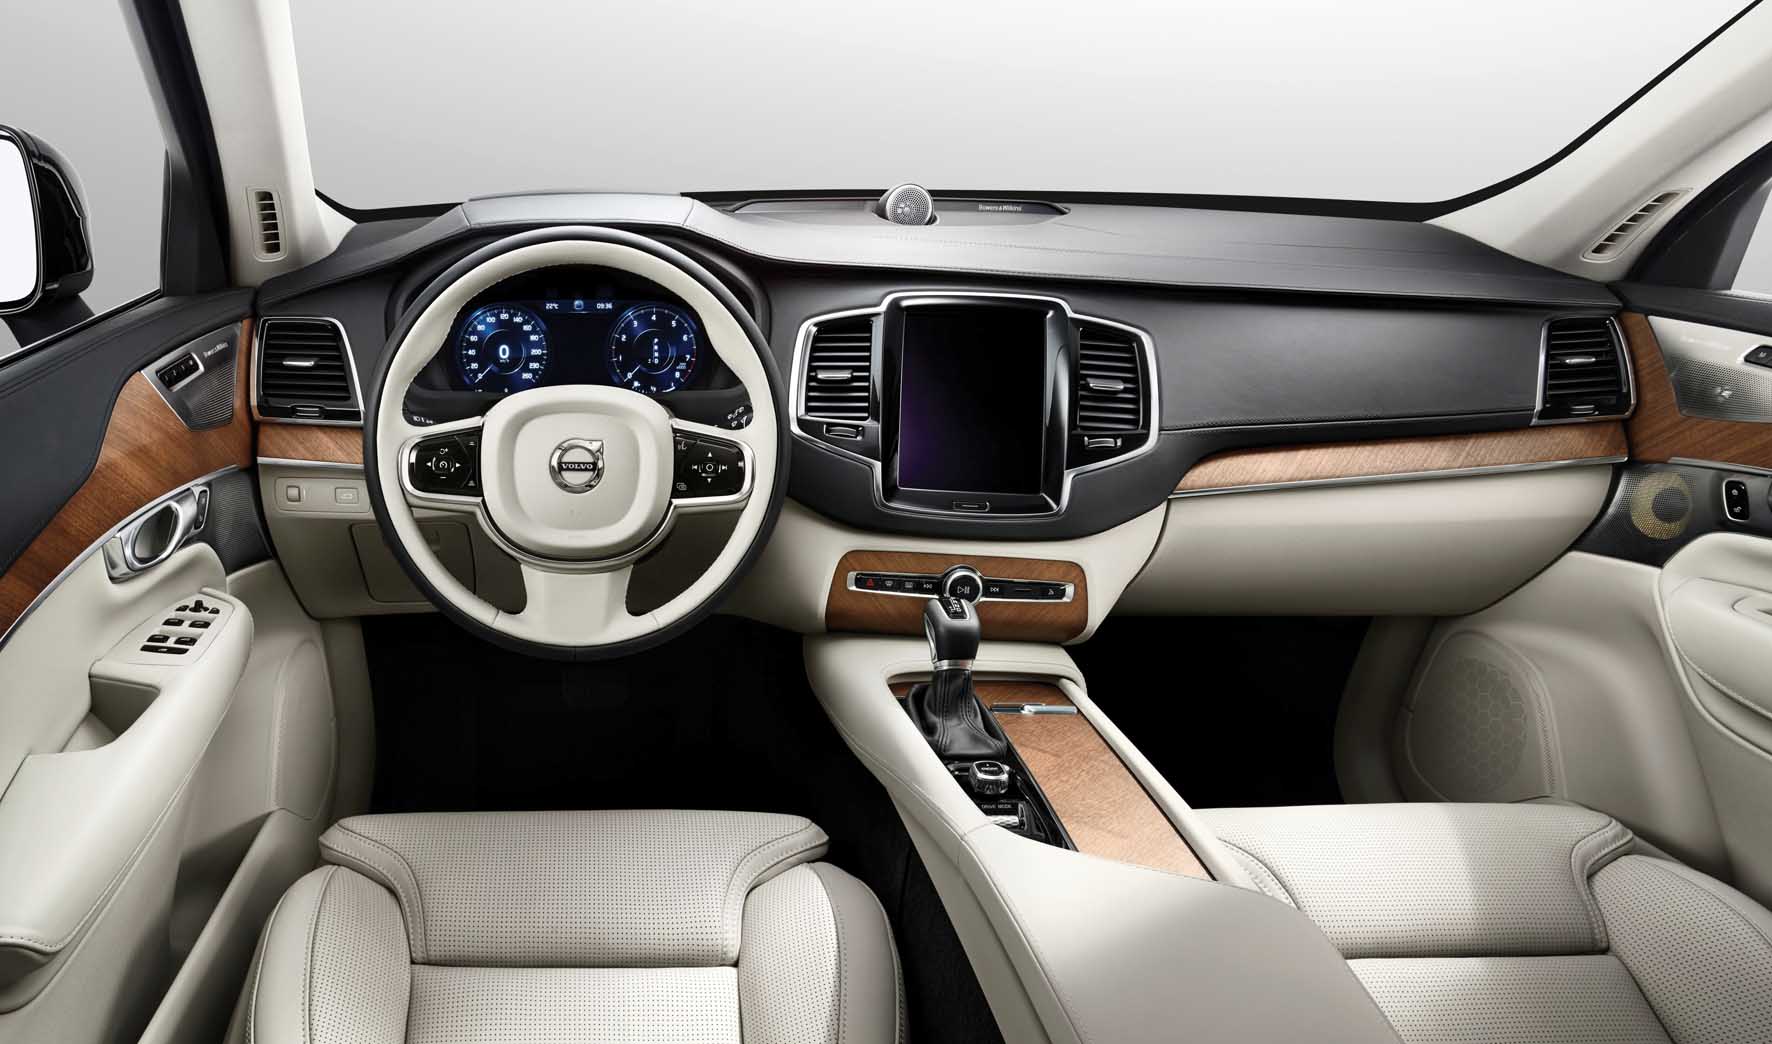 Volvo 2014 nuova XC 90 interno plancia-ilnordest